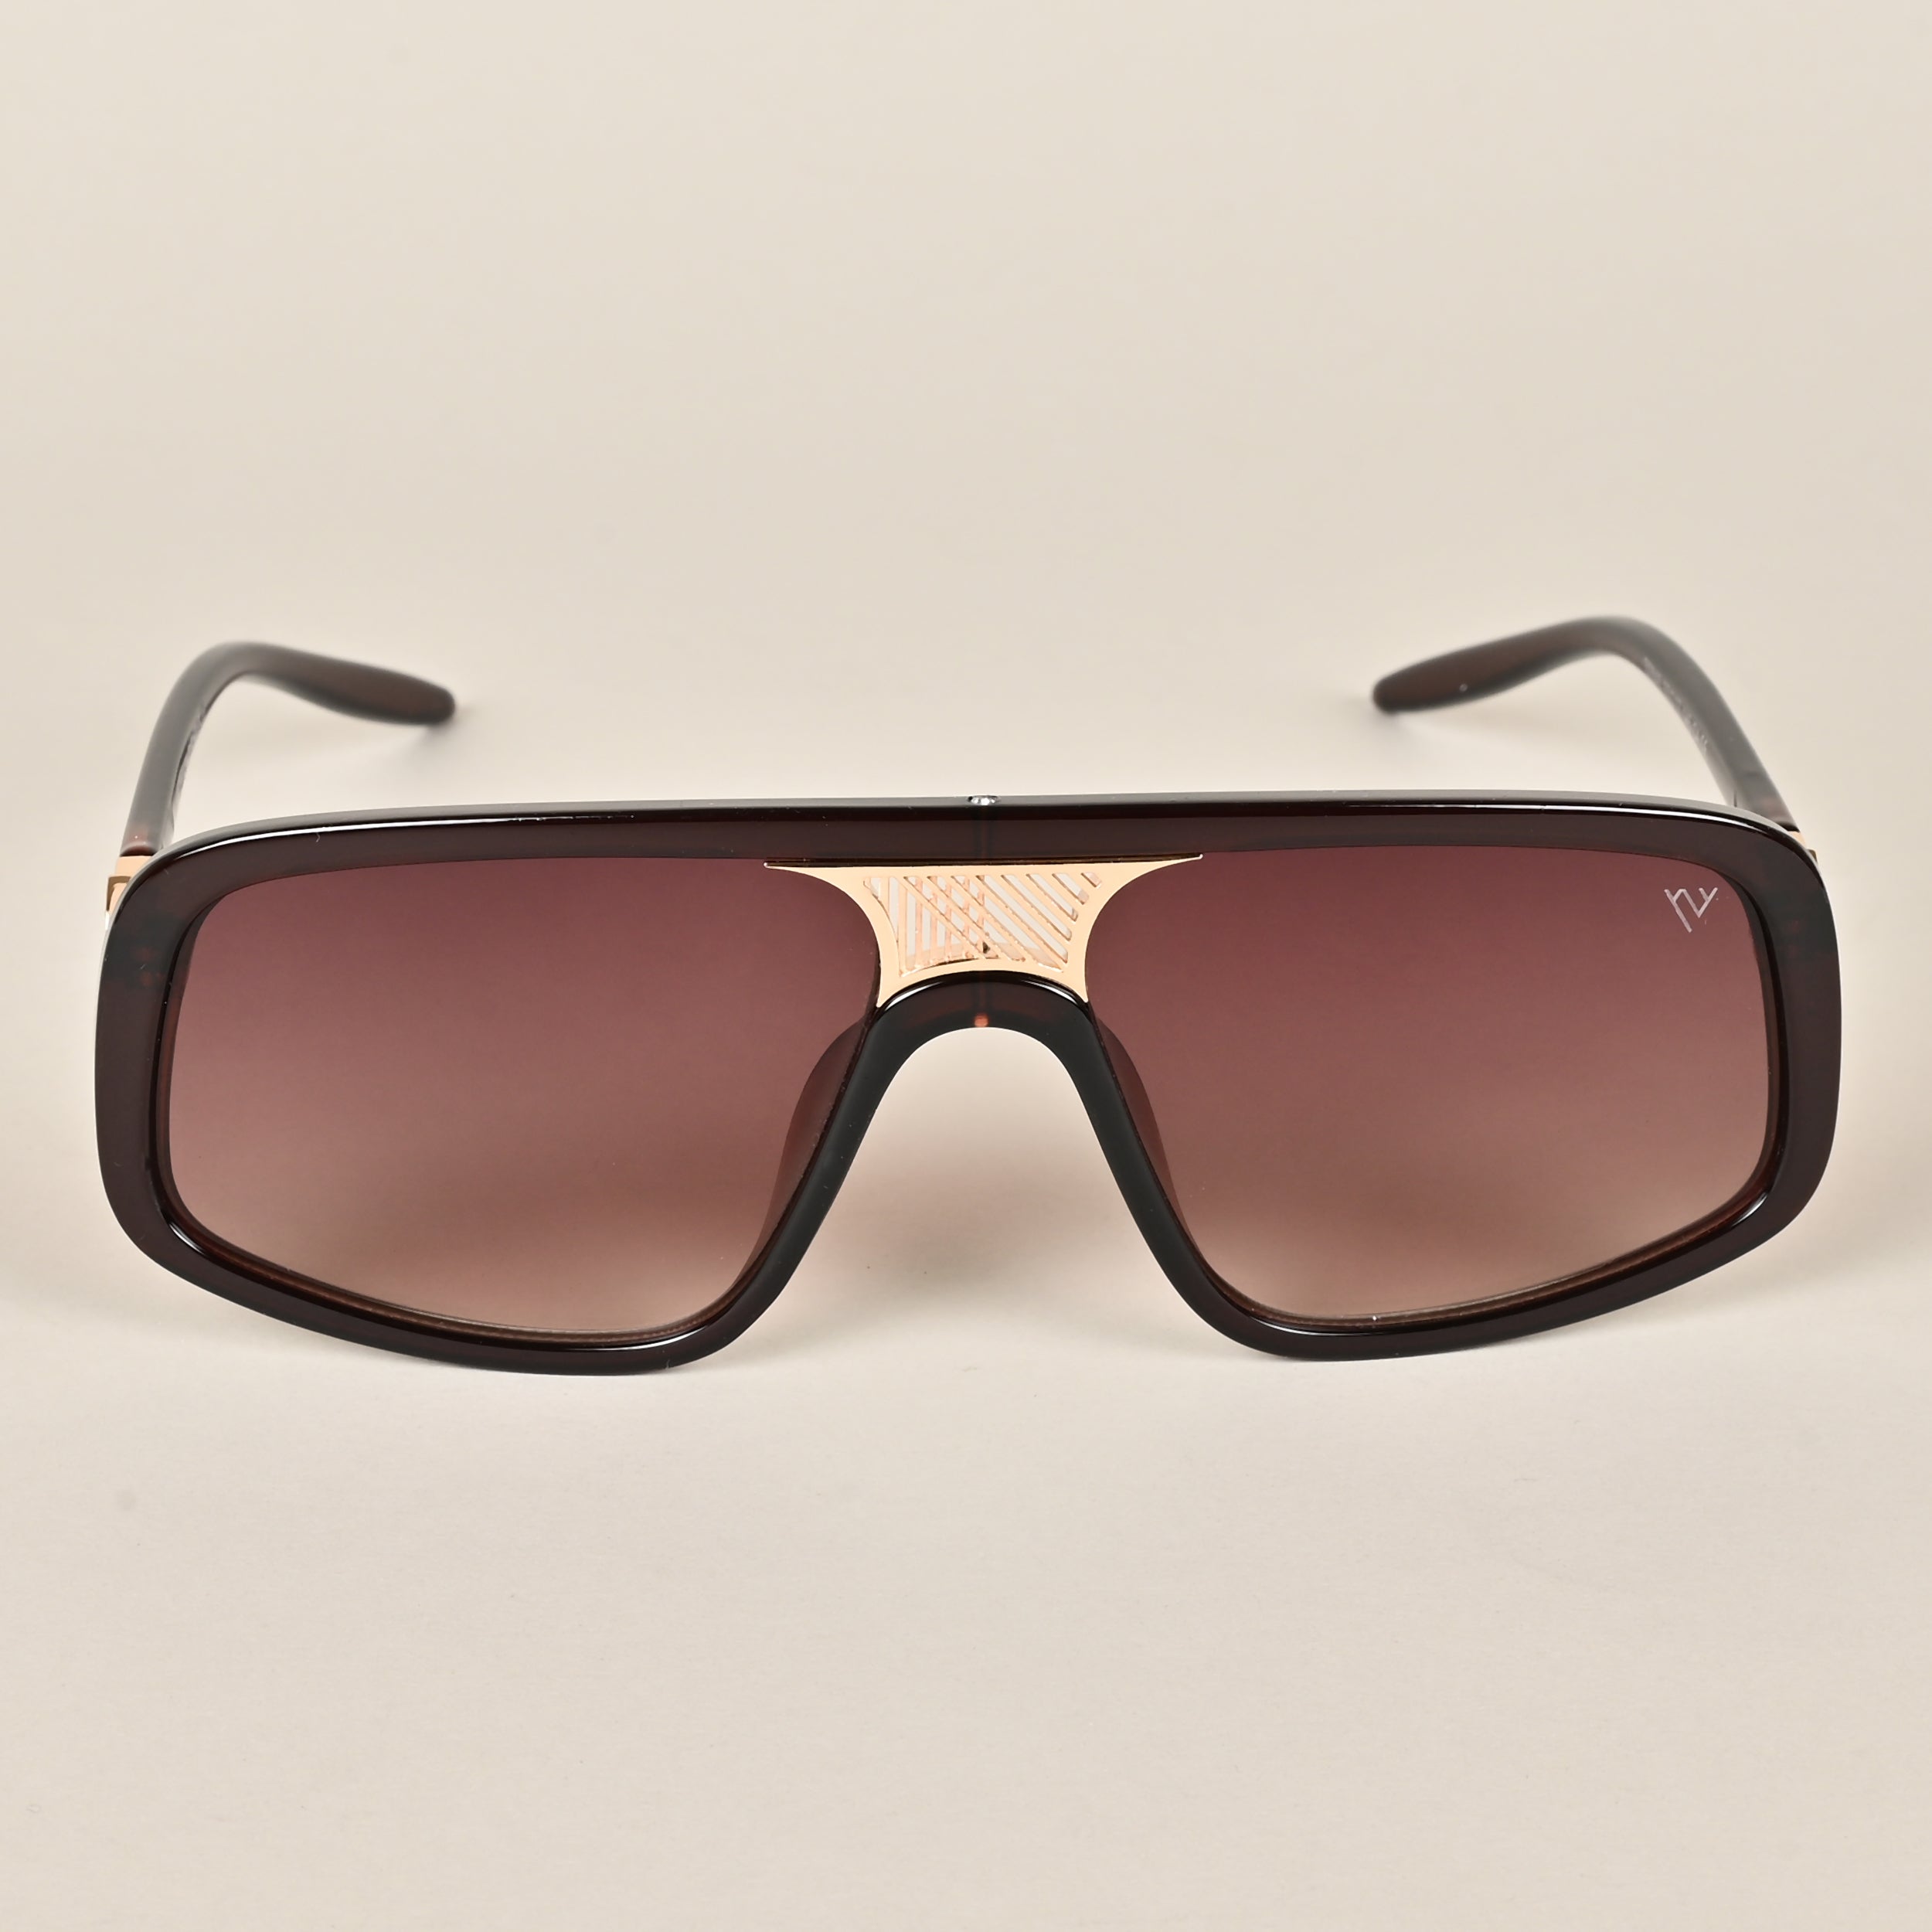 Voyage Brown Wayfarer Sunglasses for Men & Women (2846MG4017)